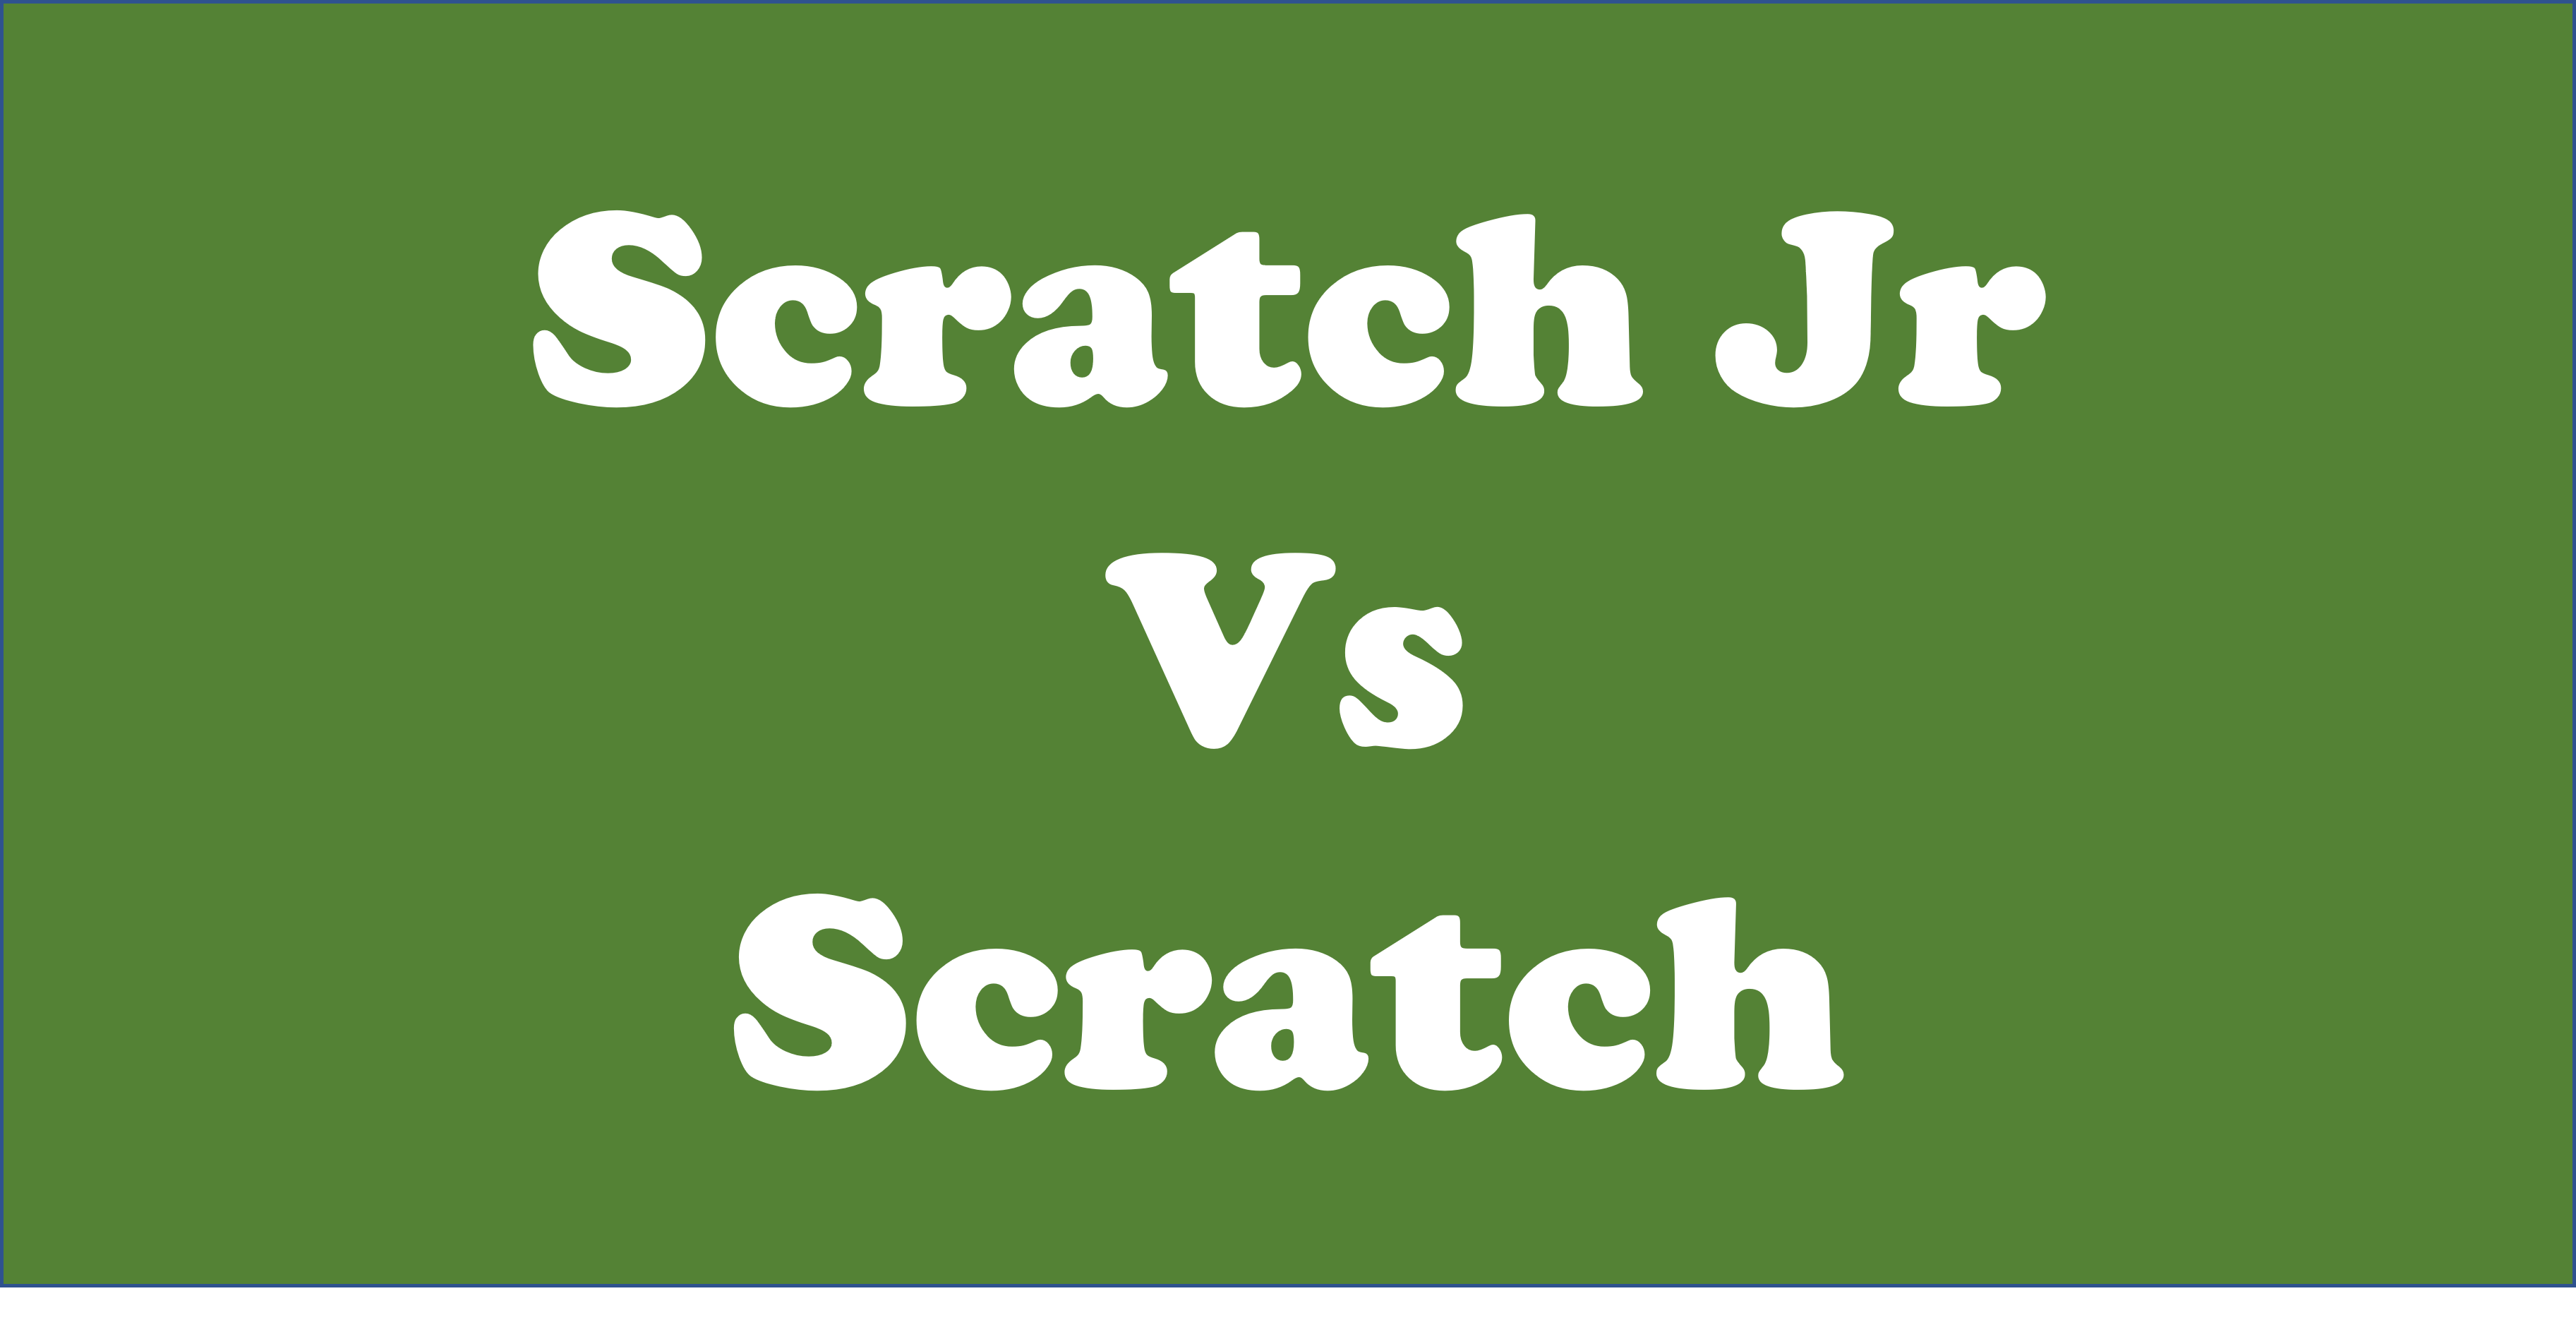 Scratch programming language - Techclass4kids